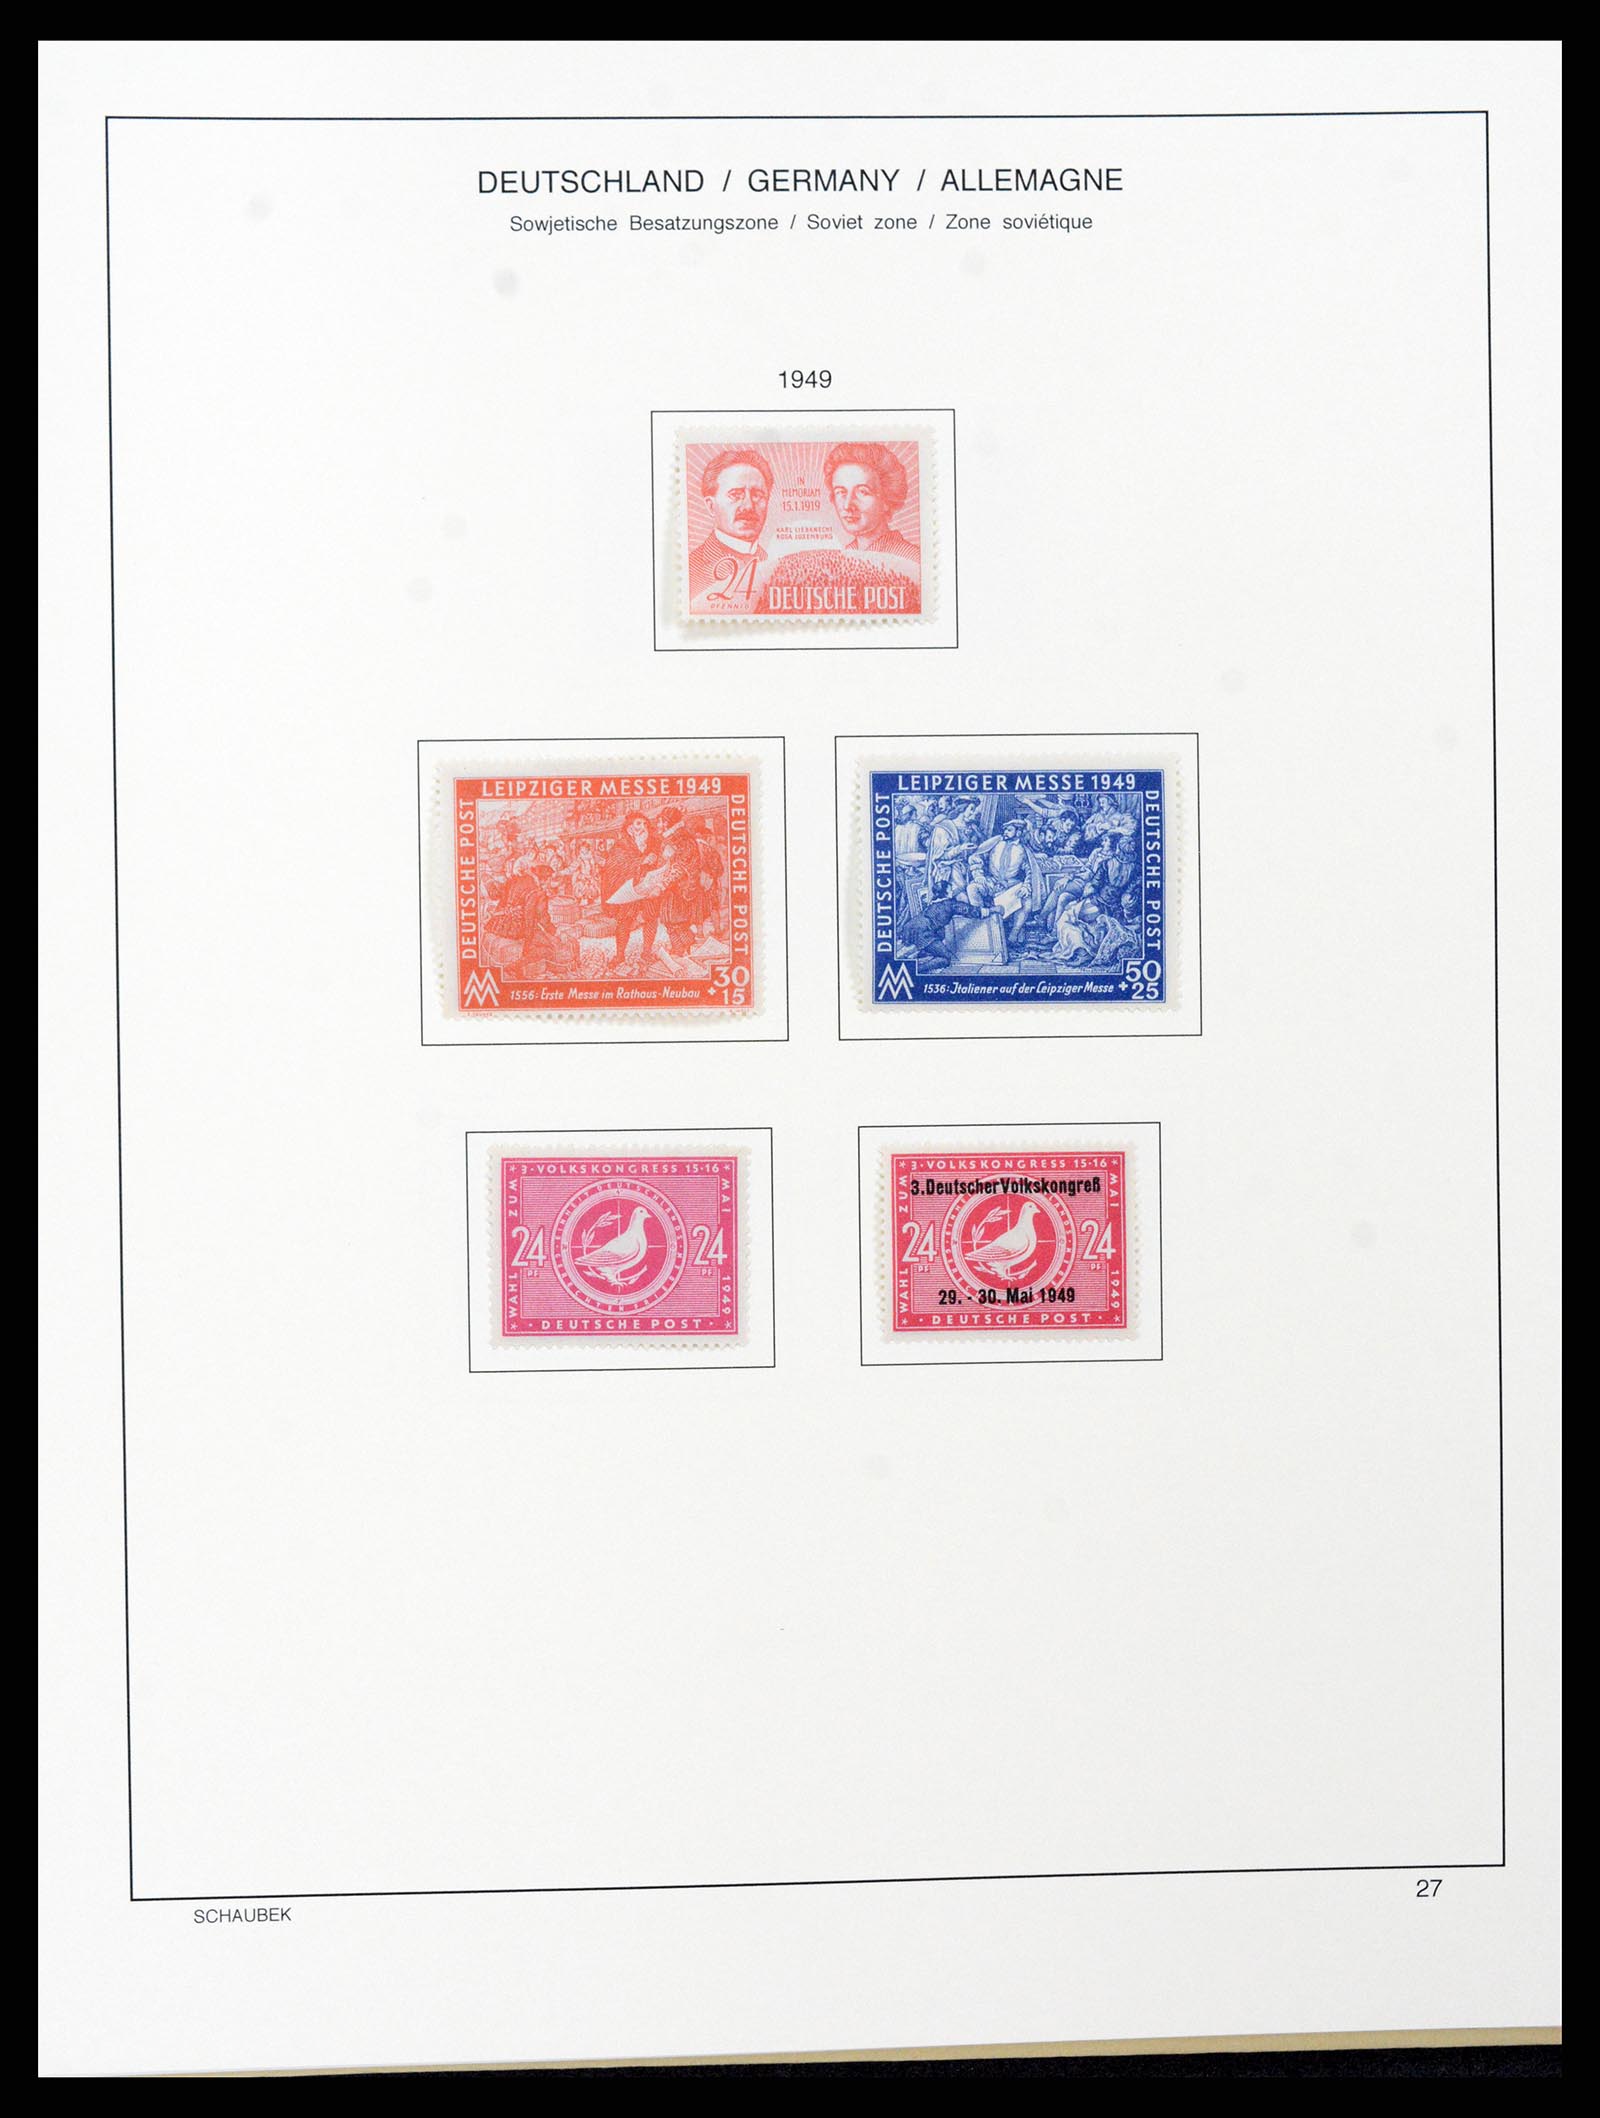 37645 054 - Stamp collection 37645 German Zones 1945-1949.